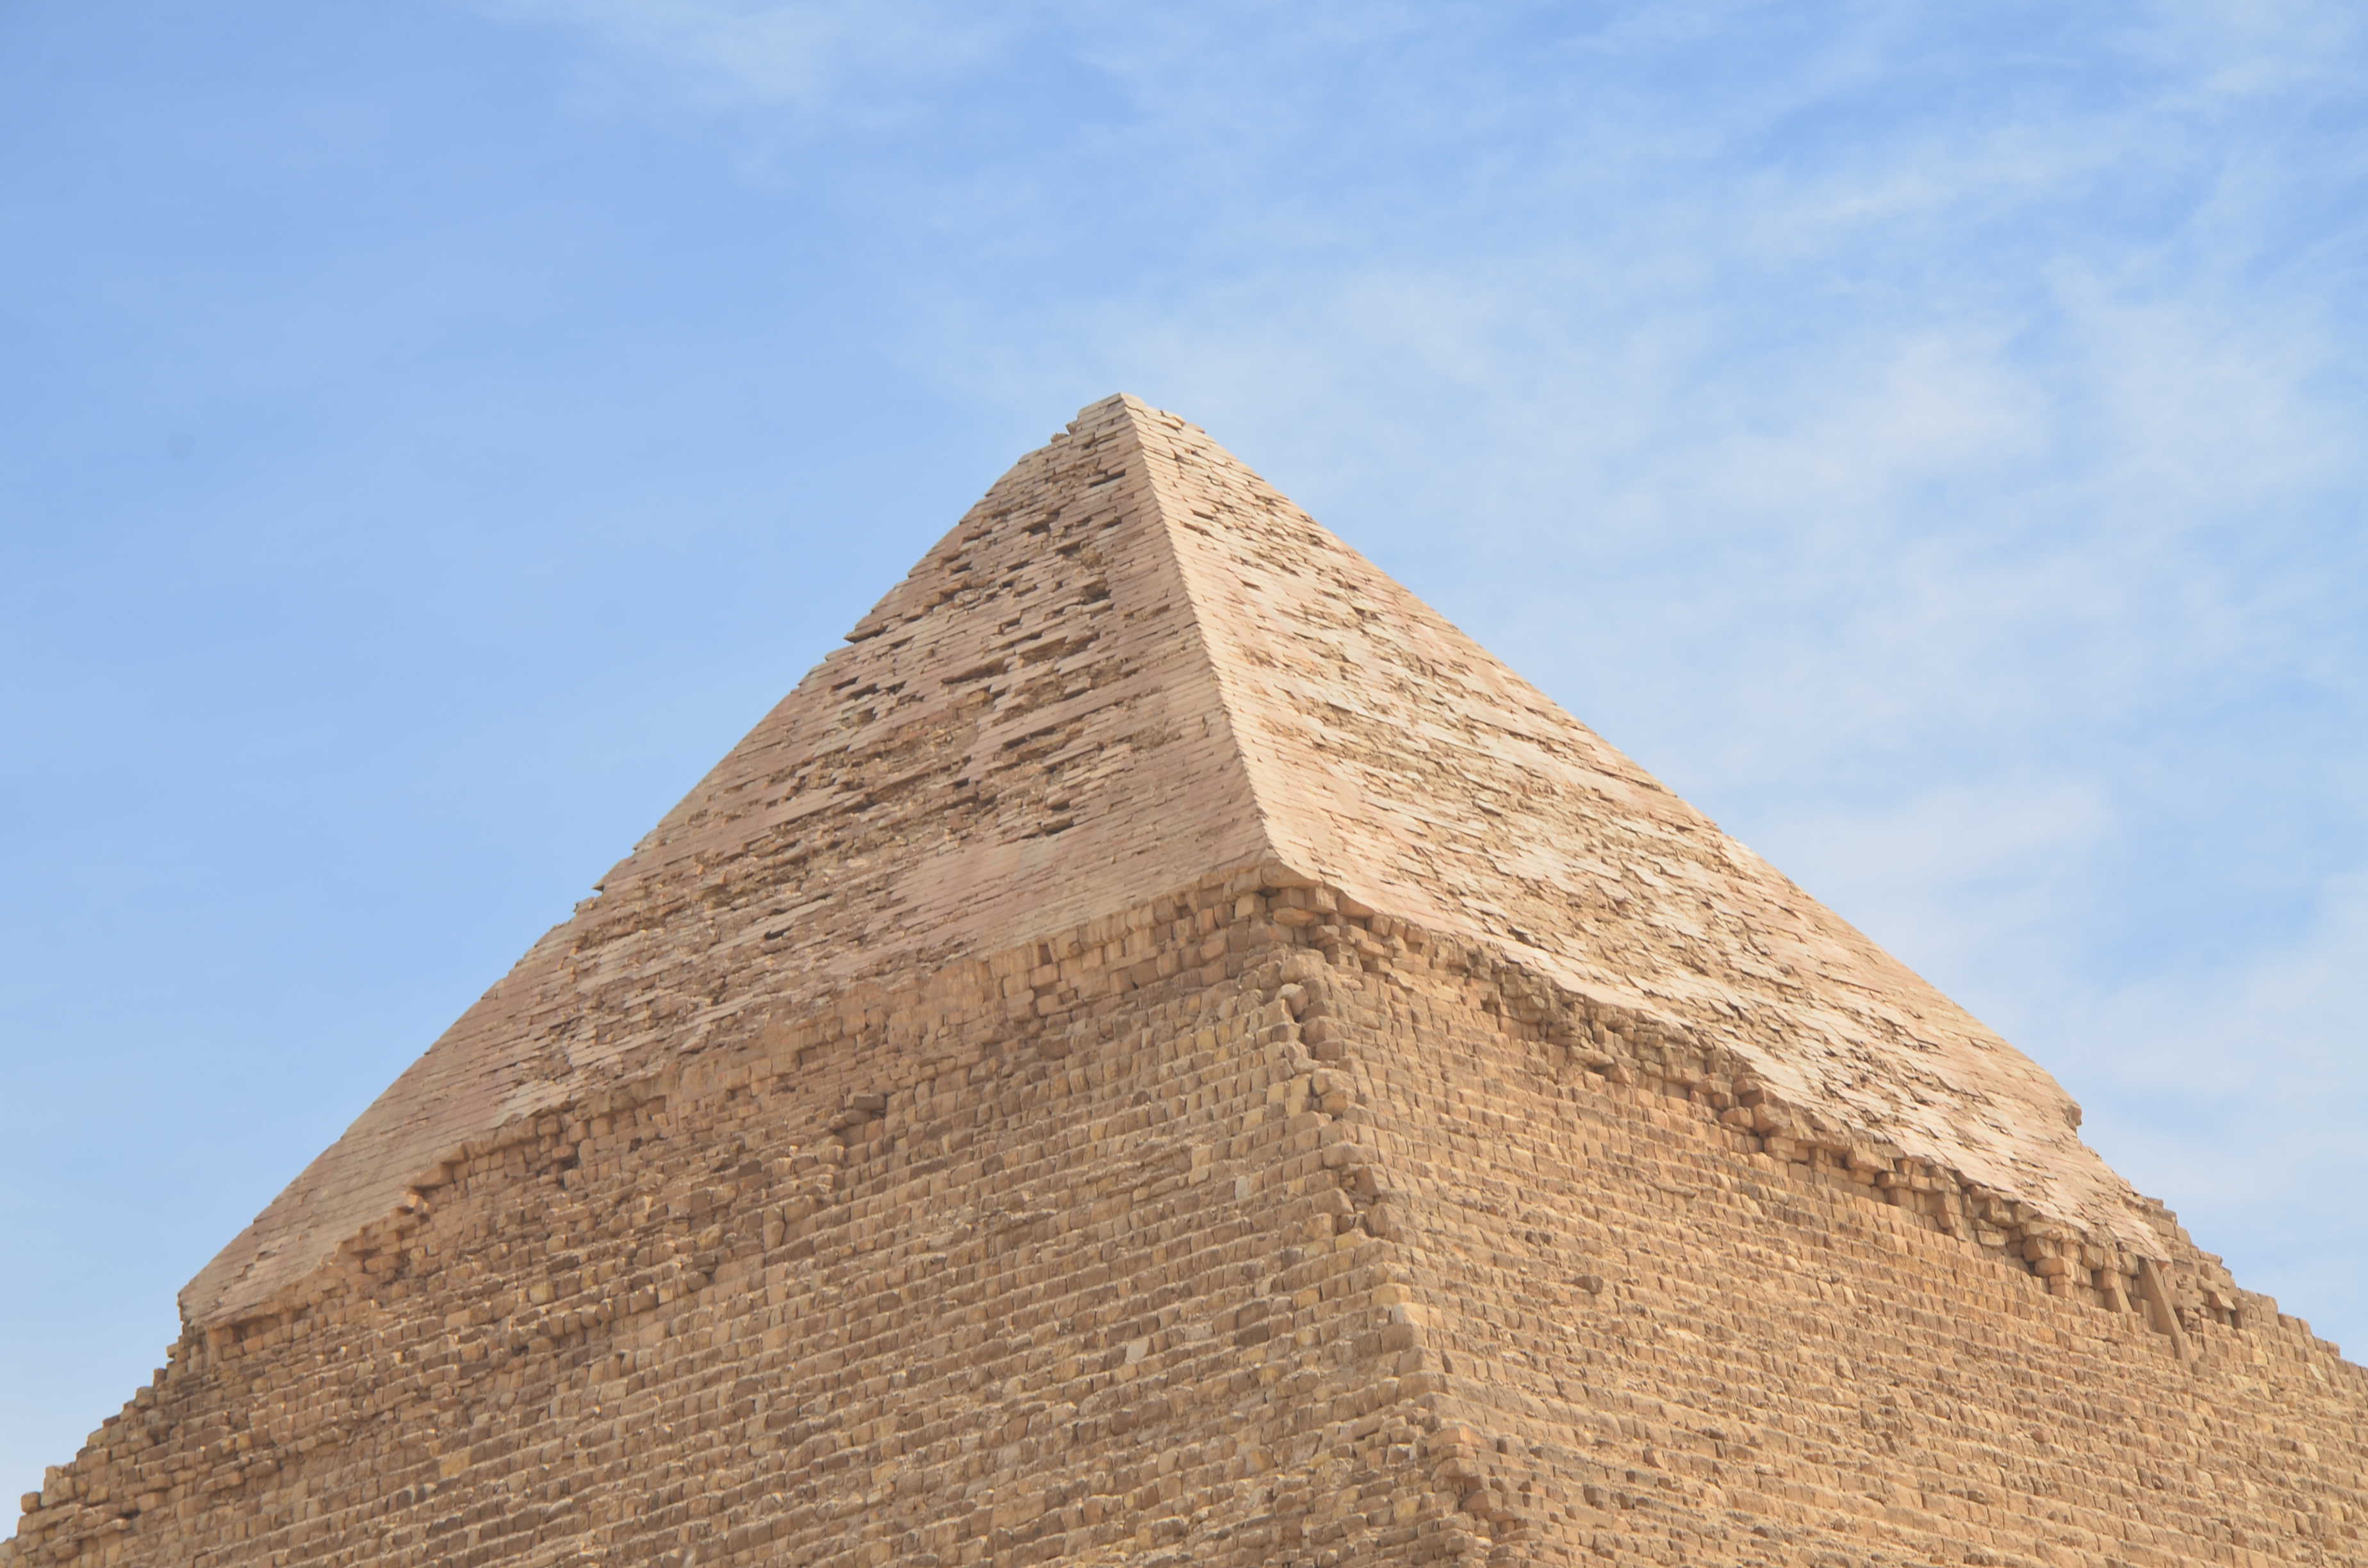 Pyramid of Khafre at the Pyramids of Giza in Egypt